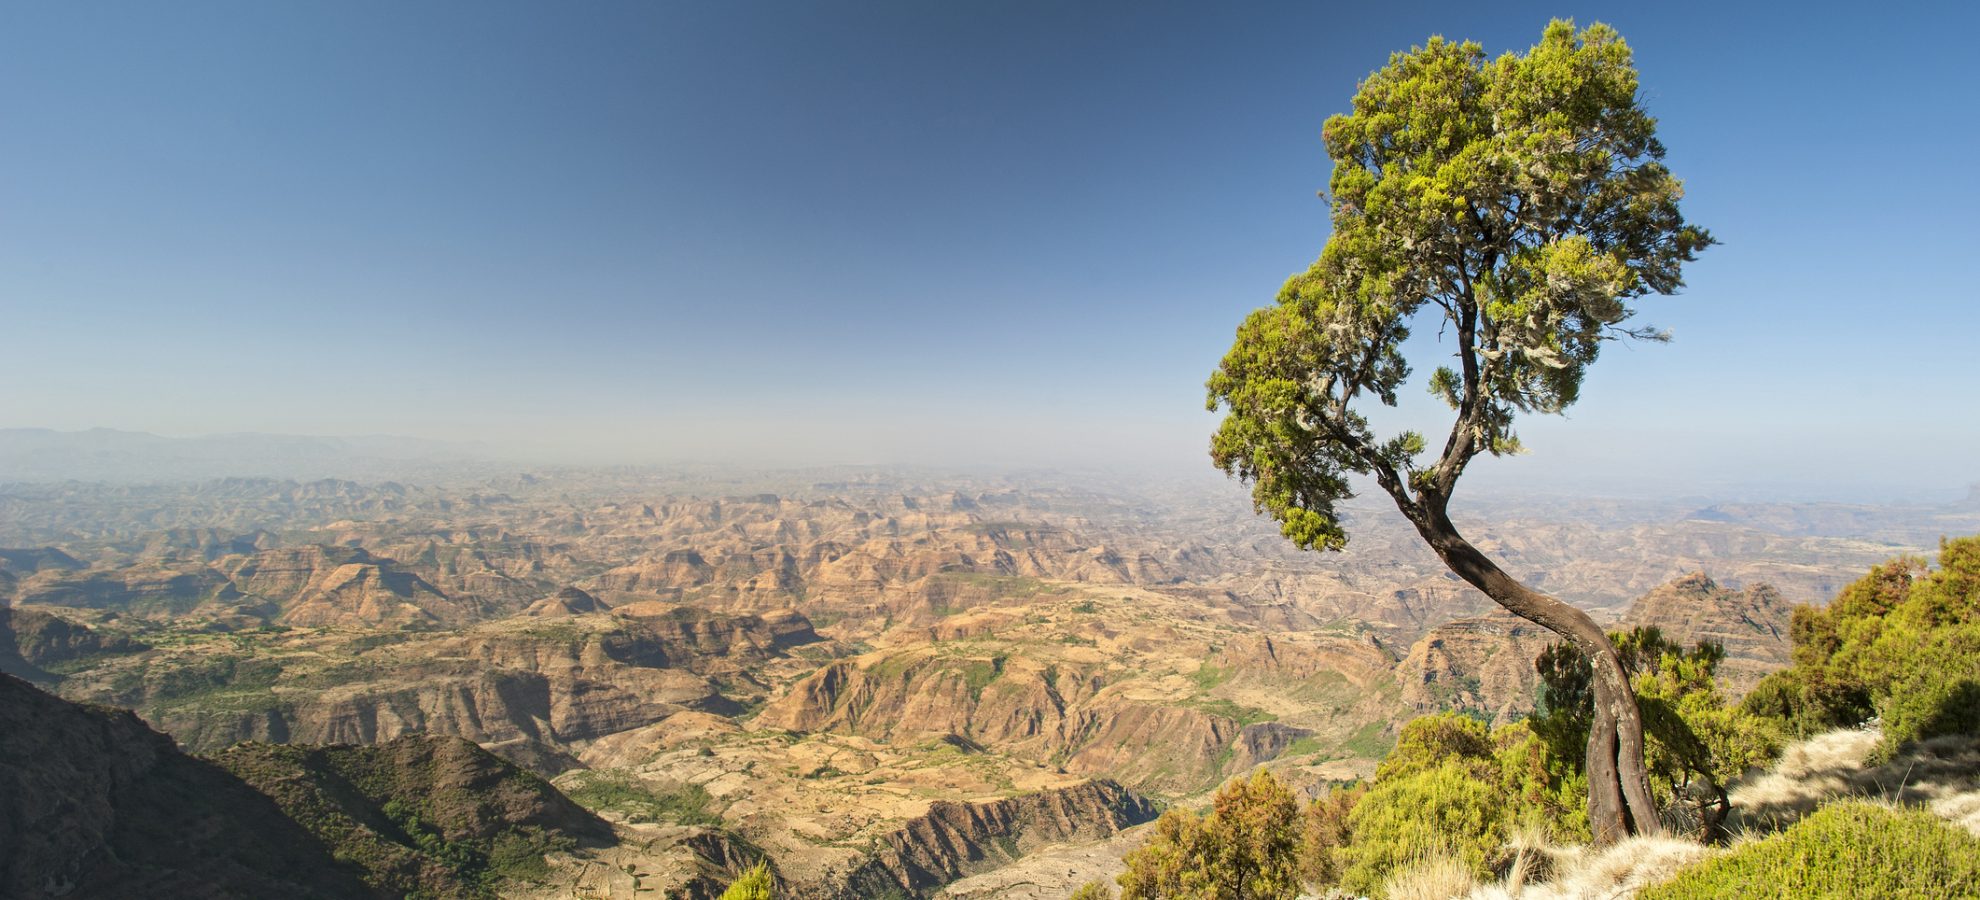 Bergen in Ethiopie